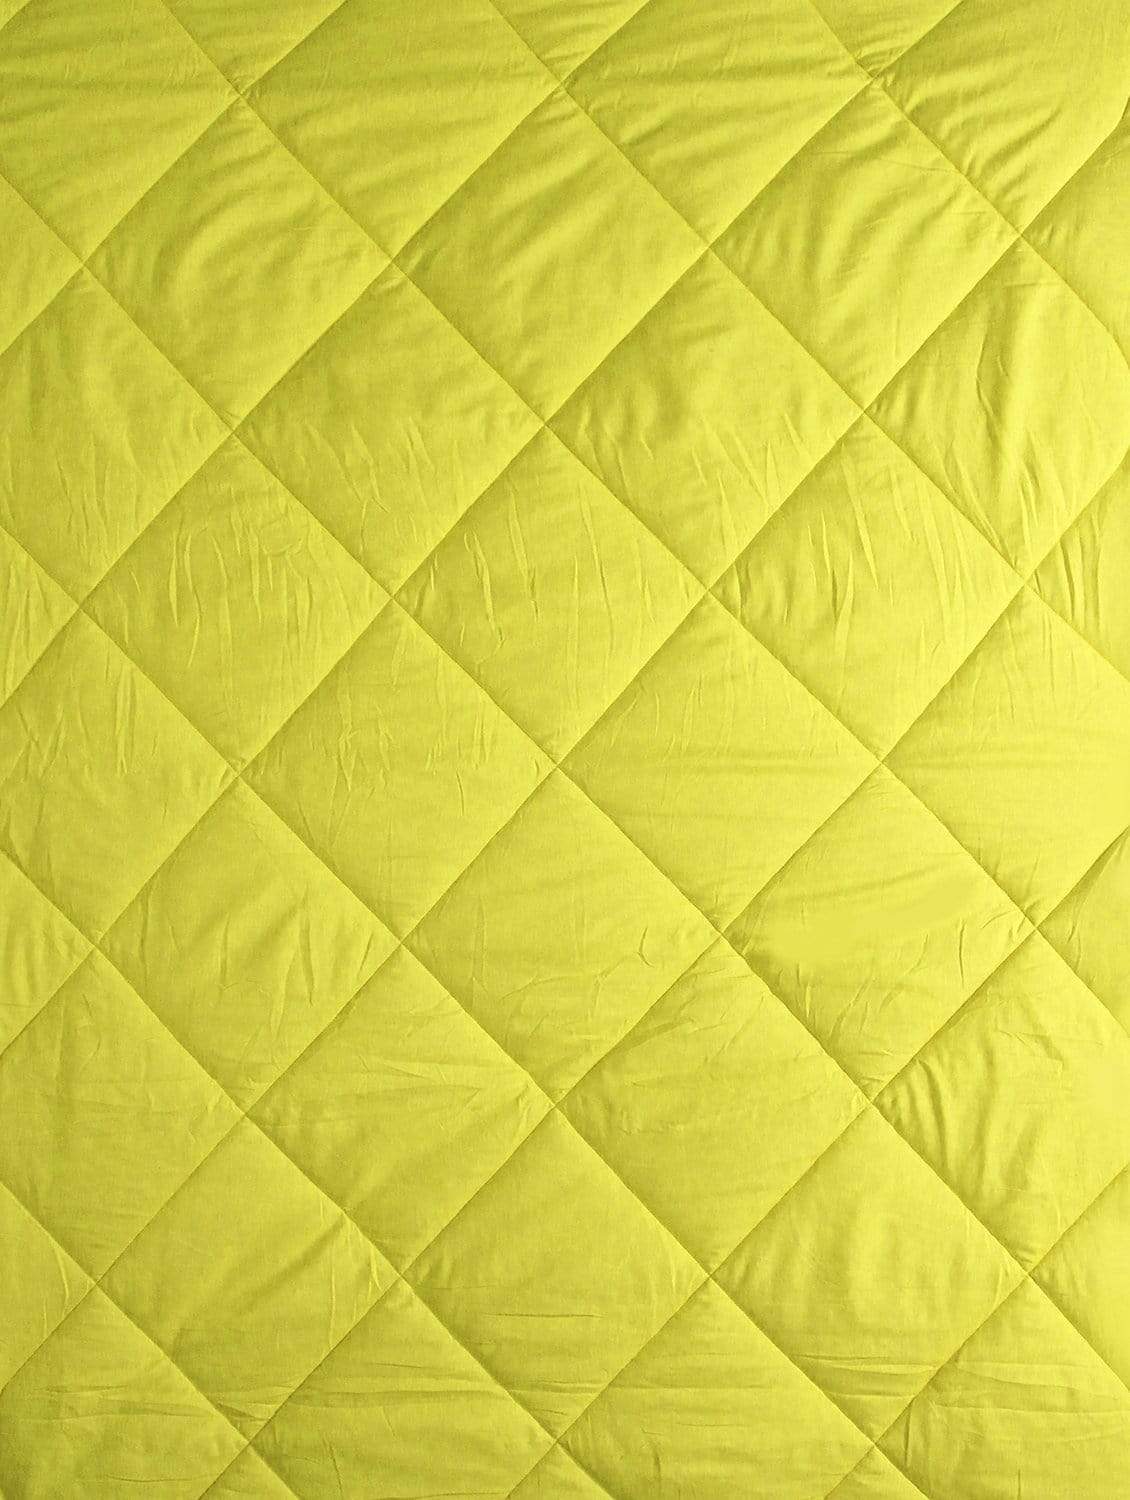 Fusion Soft Yellow & Green Dual Color Comforter Single Size - 150 cm X 225 cm